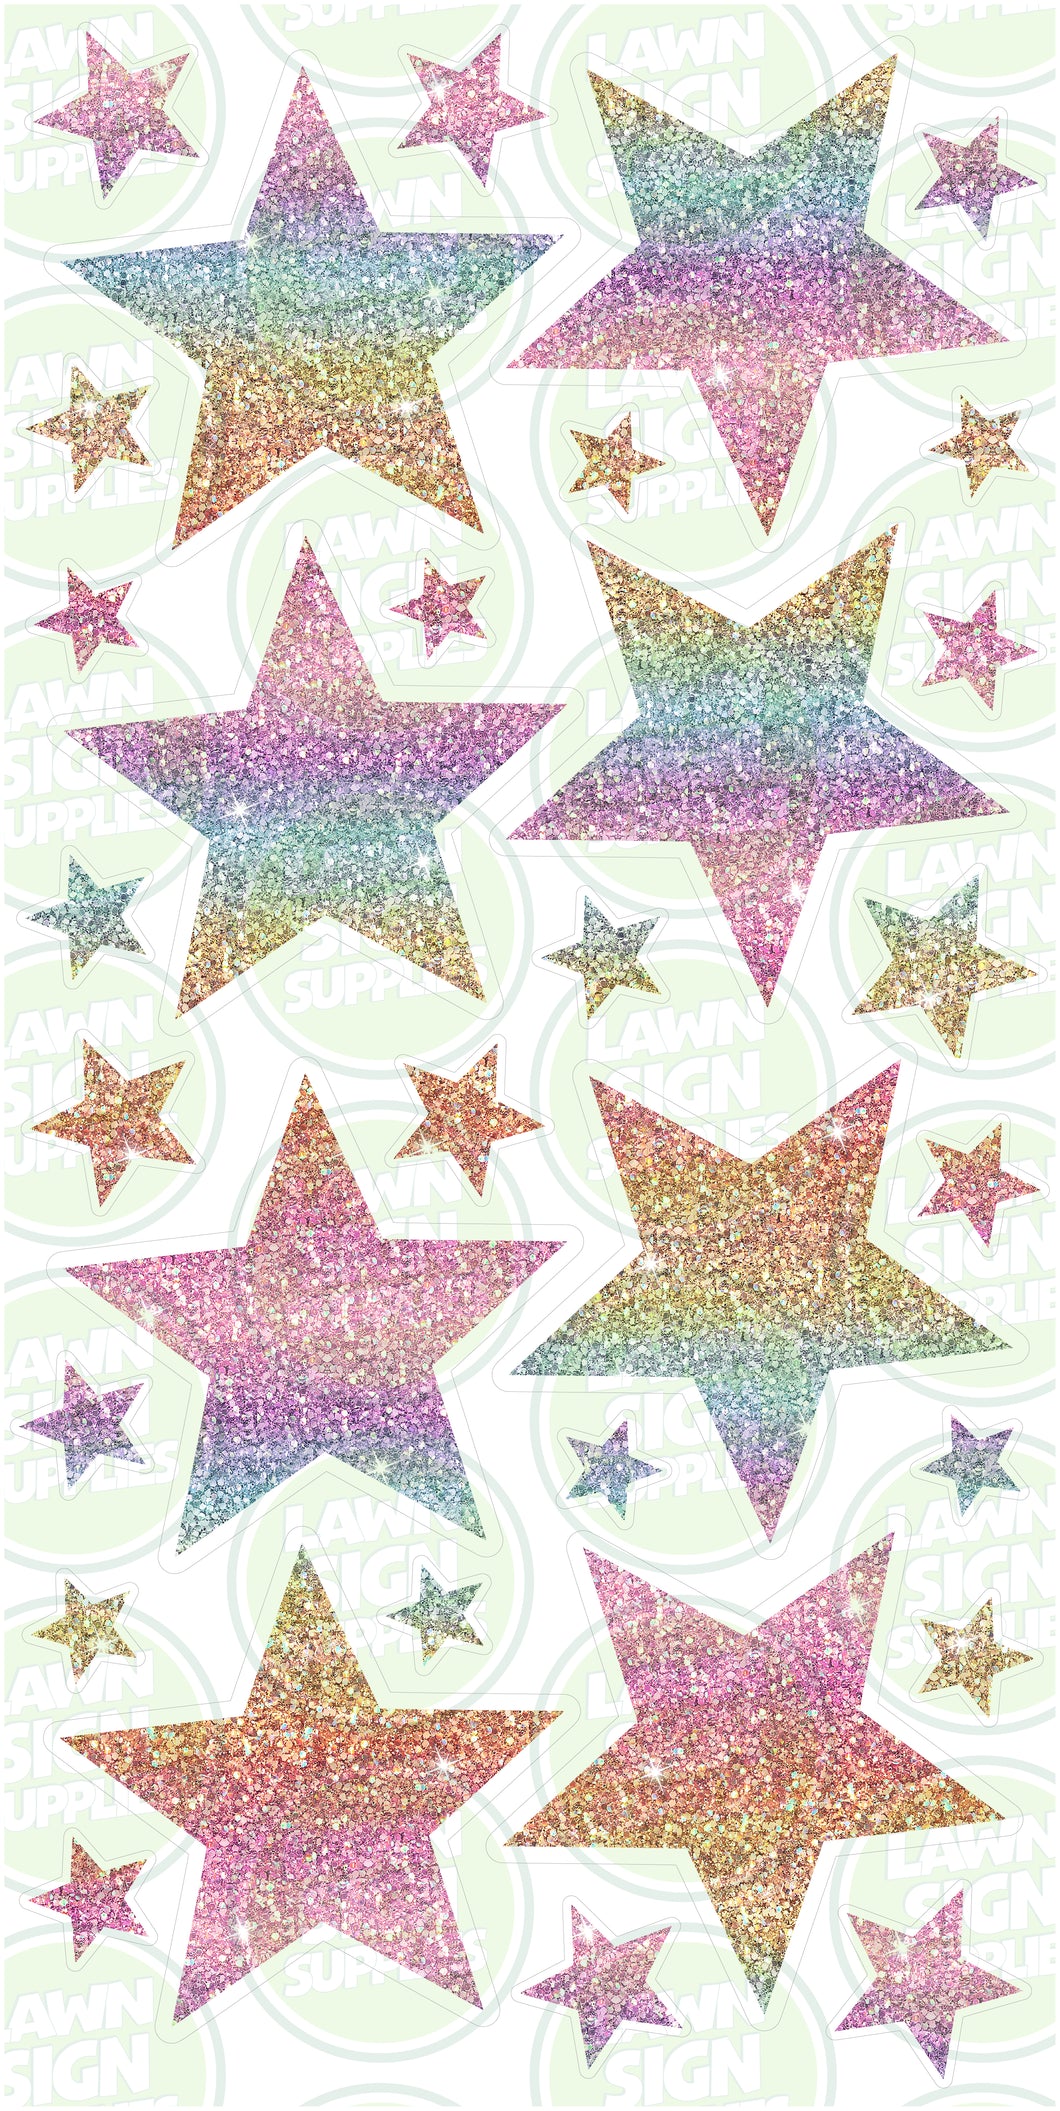 STARS - RAINBOW SPARKLE